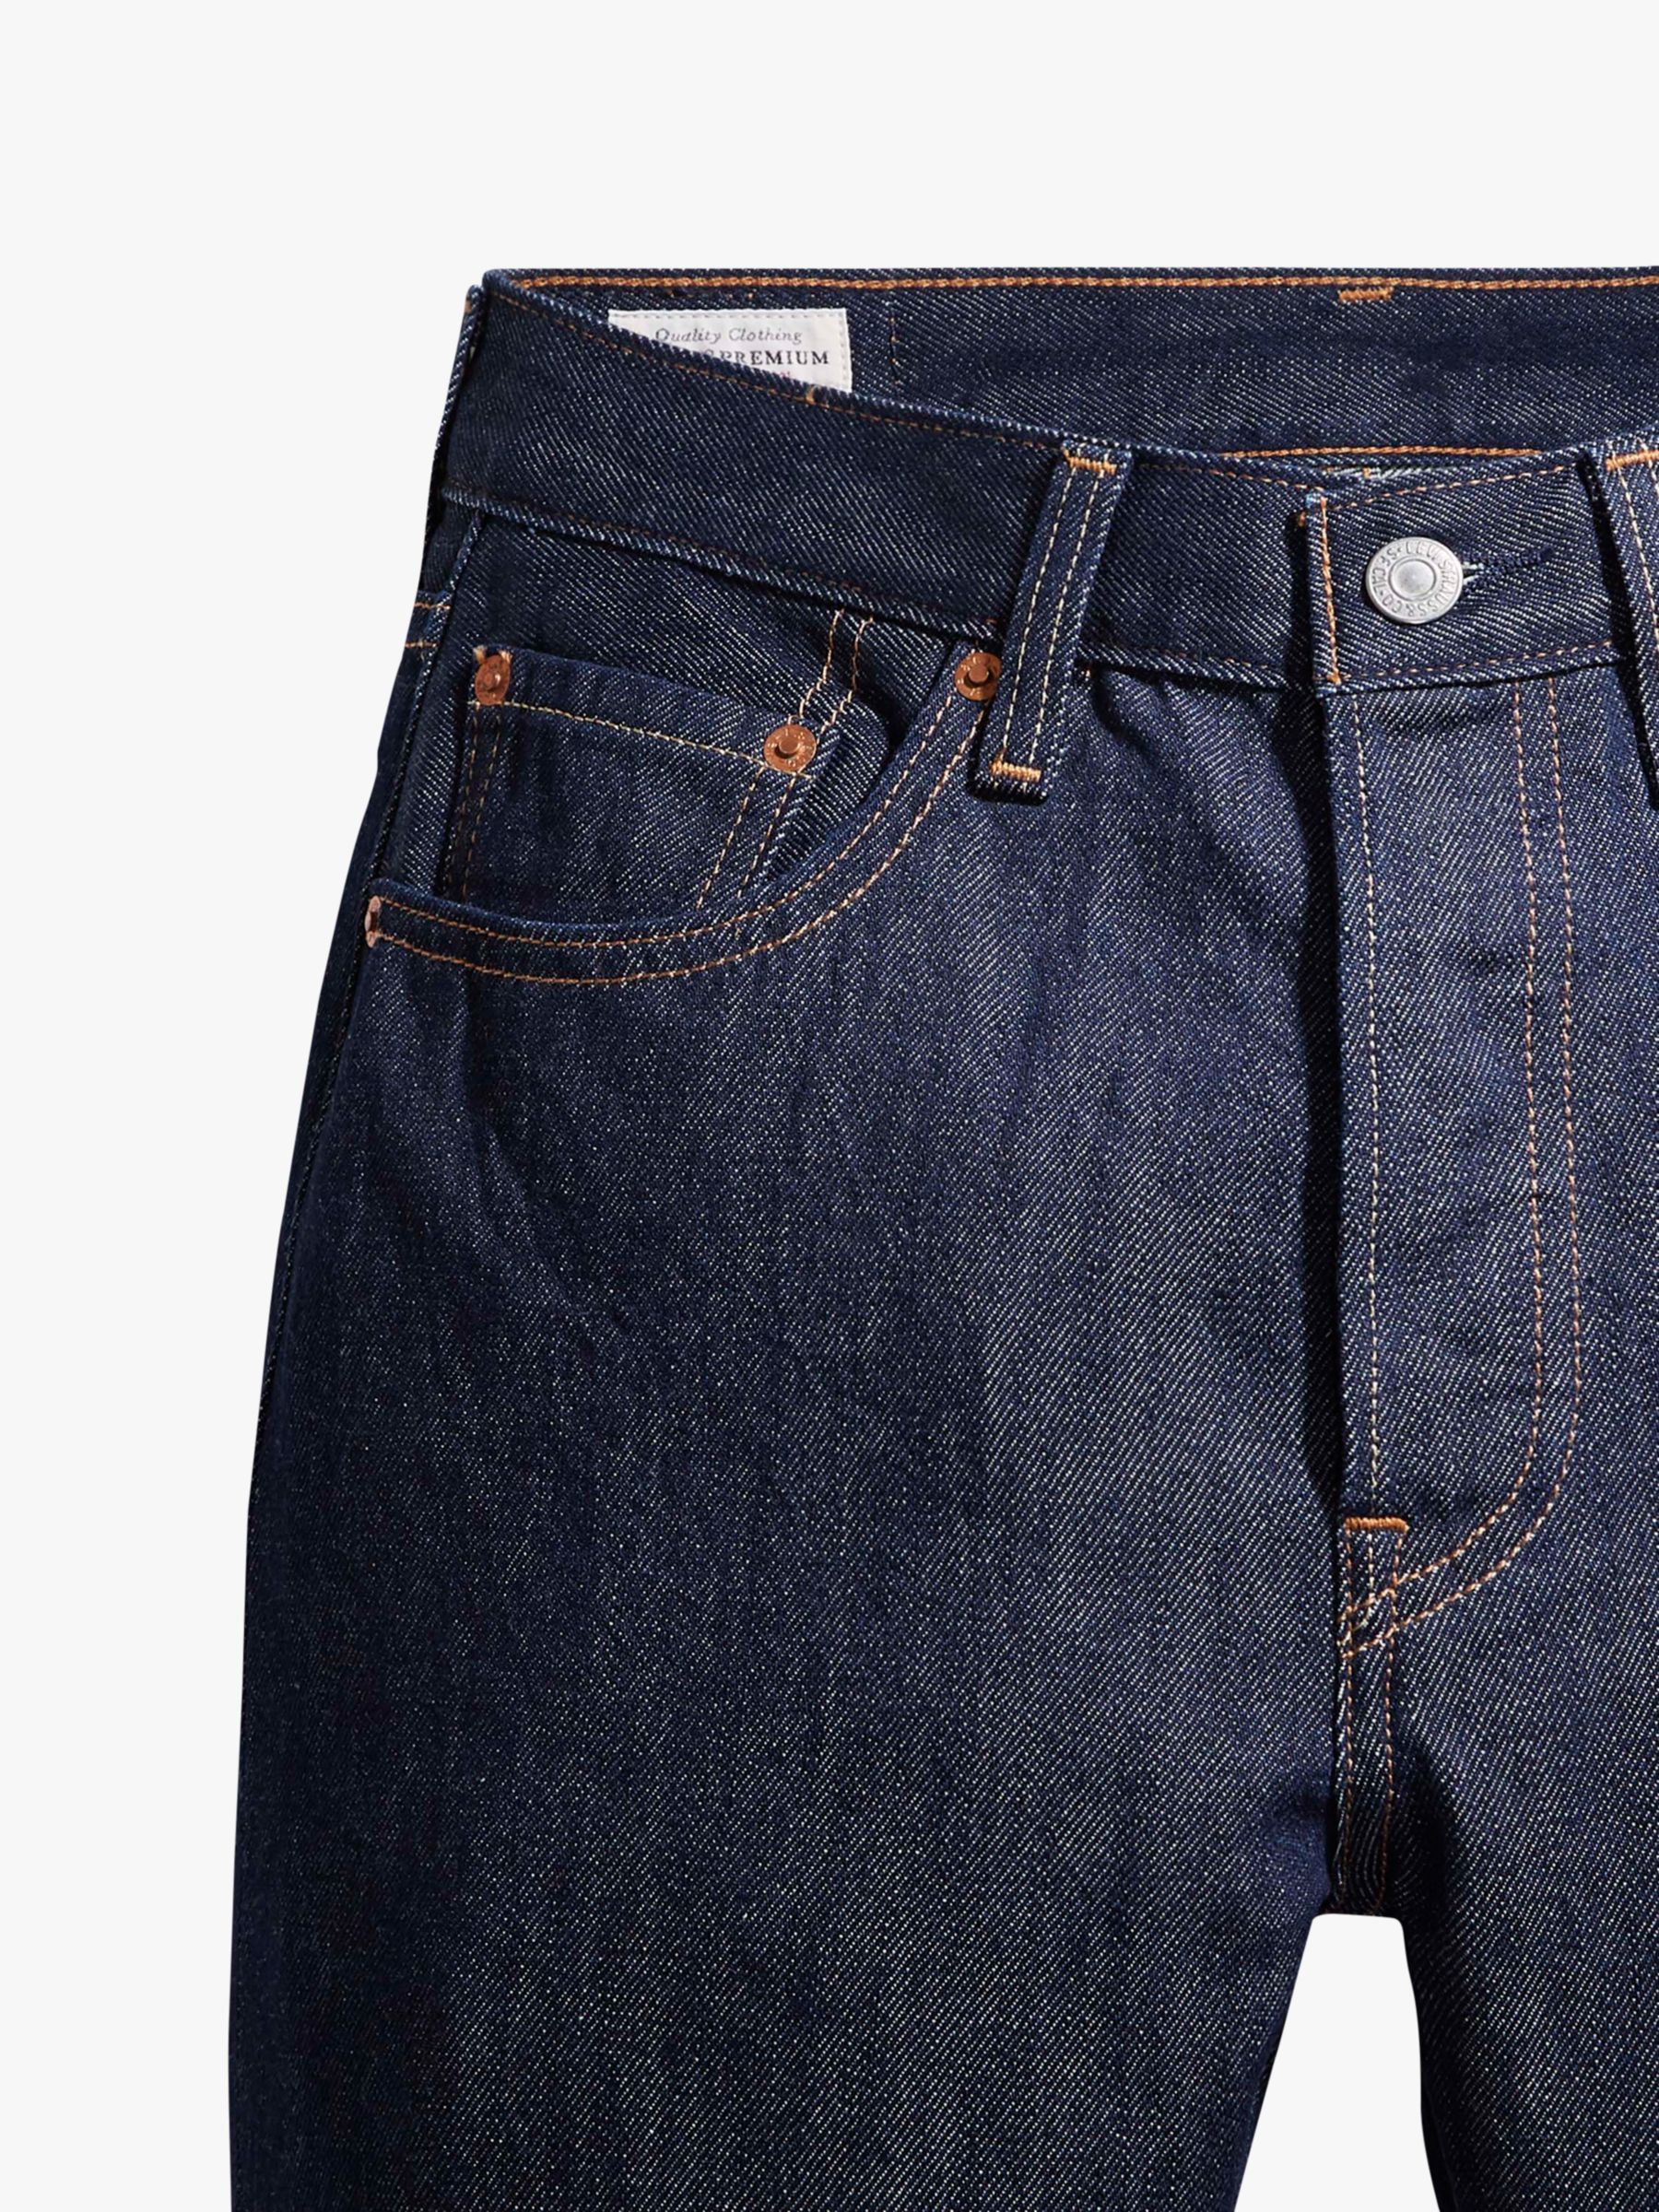 Levi's 501 Original Jeans